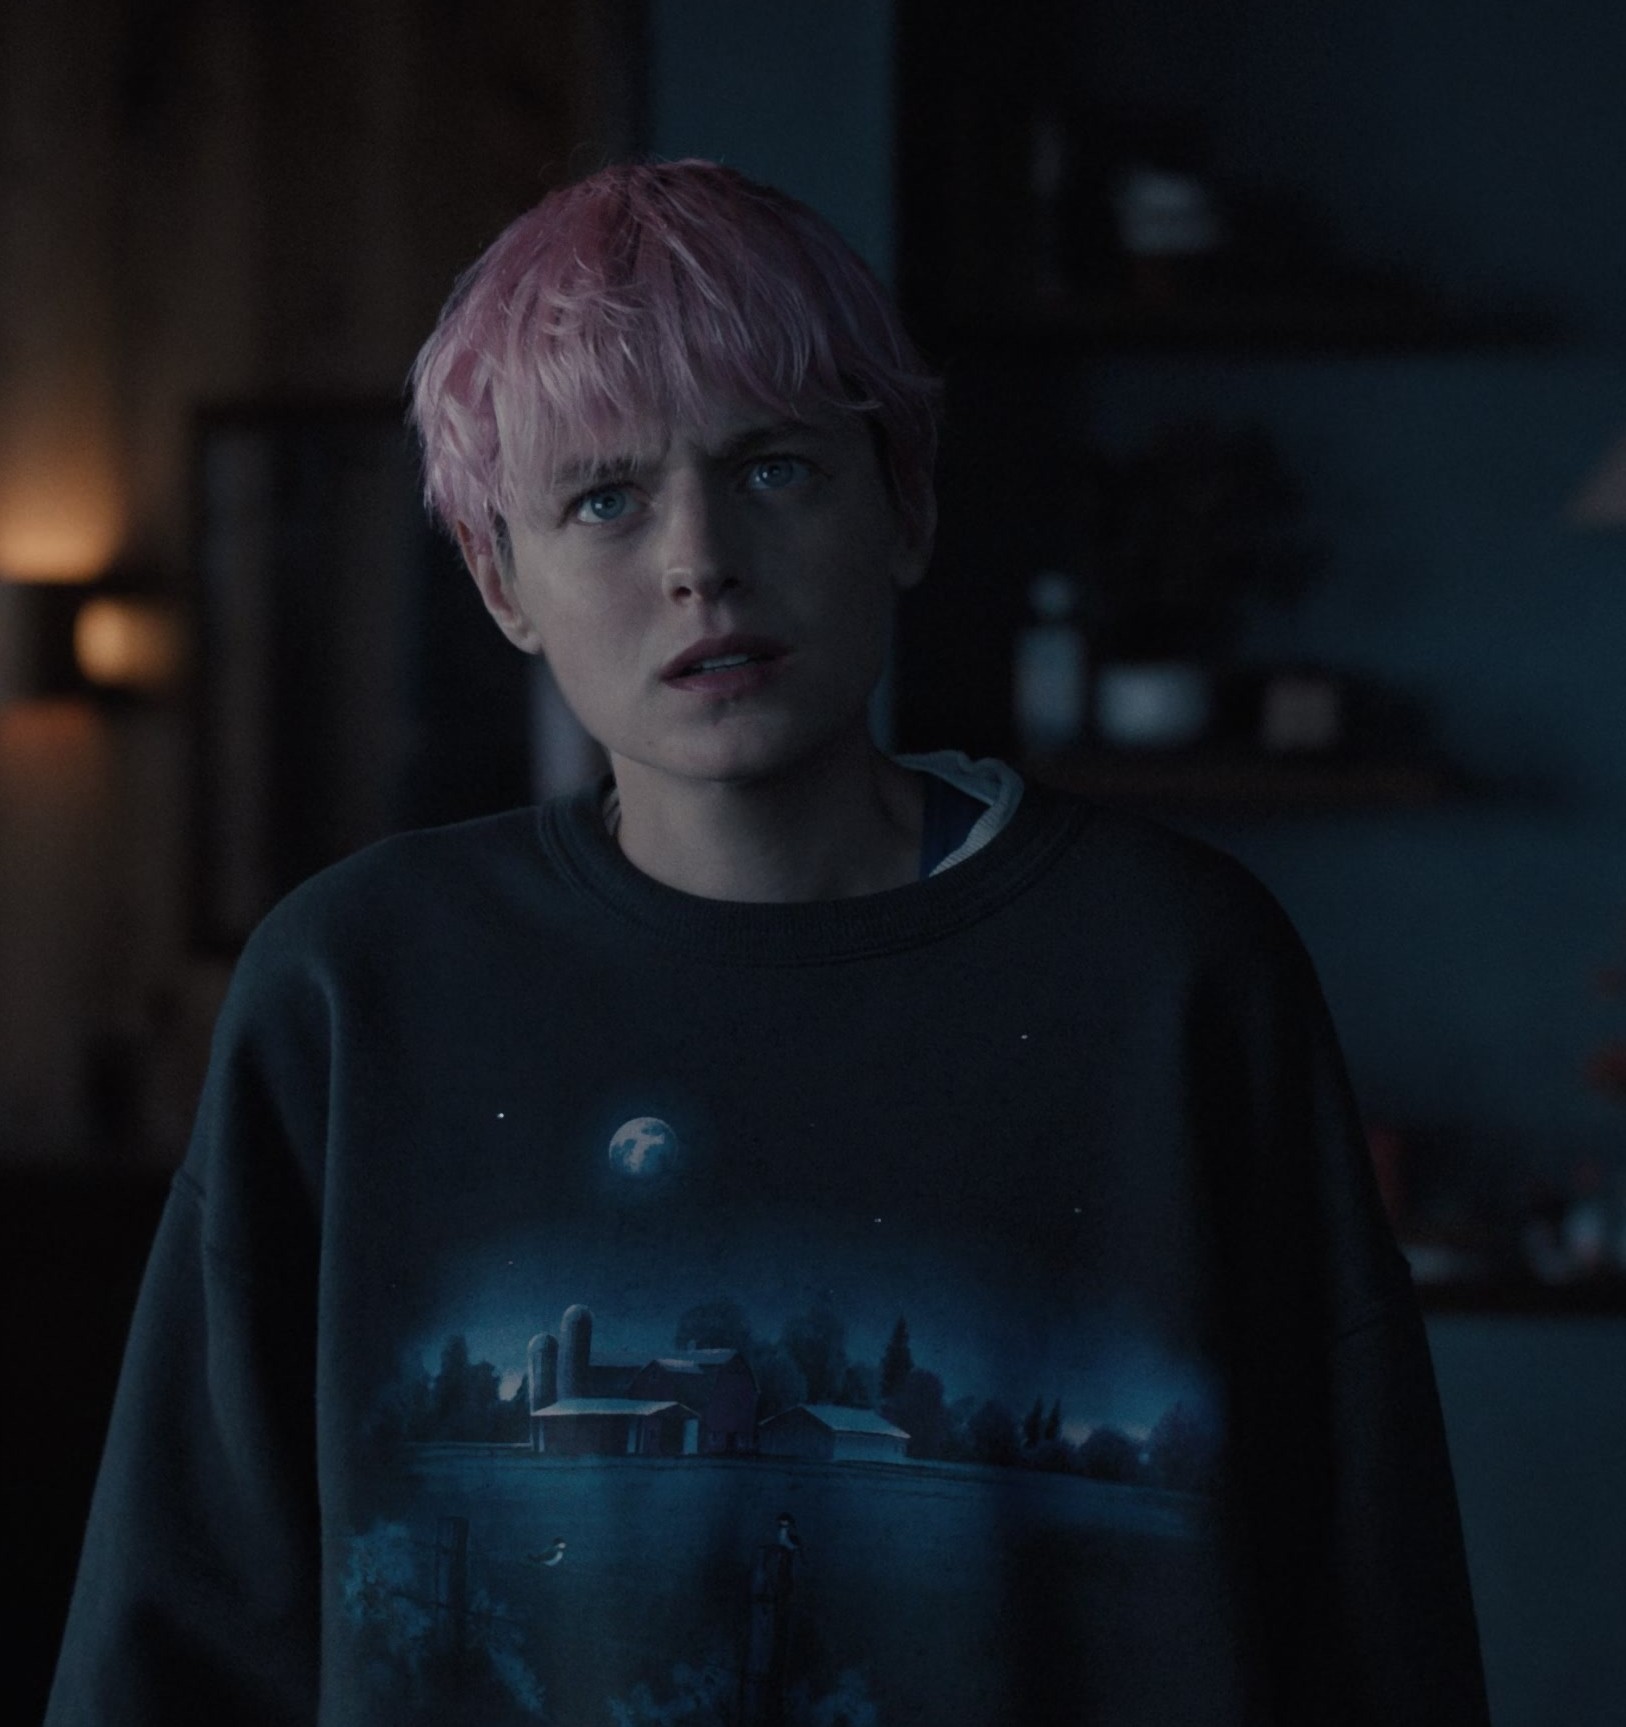 Nighttime Countryside Scene Sweatshirt Worn by Emma Corrin as Darby